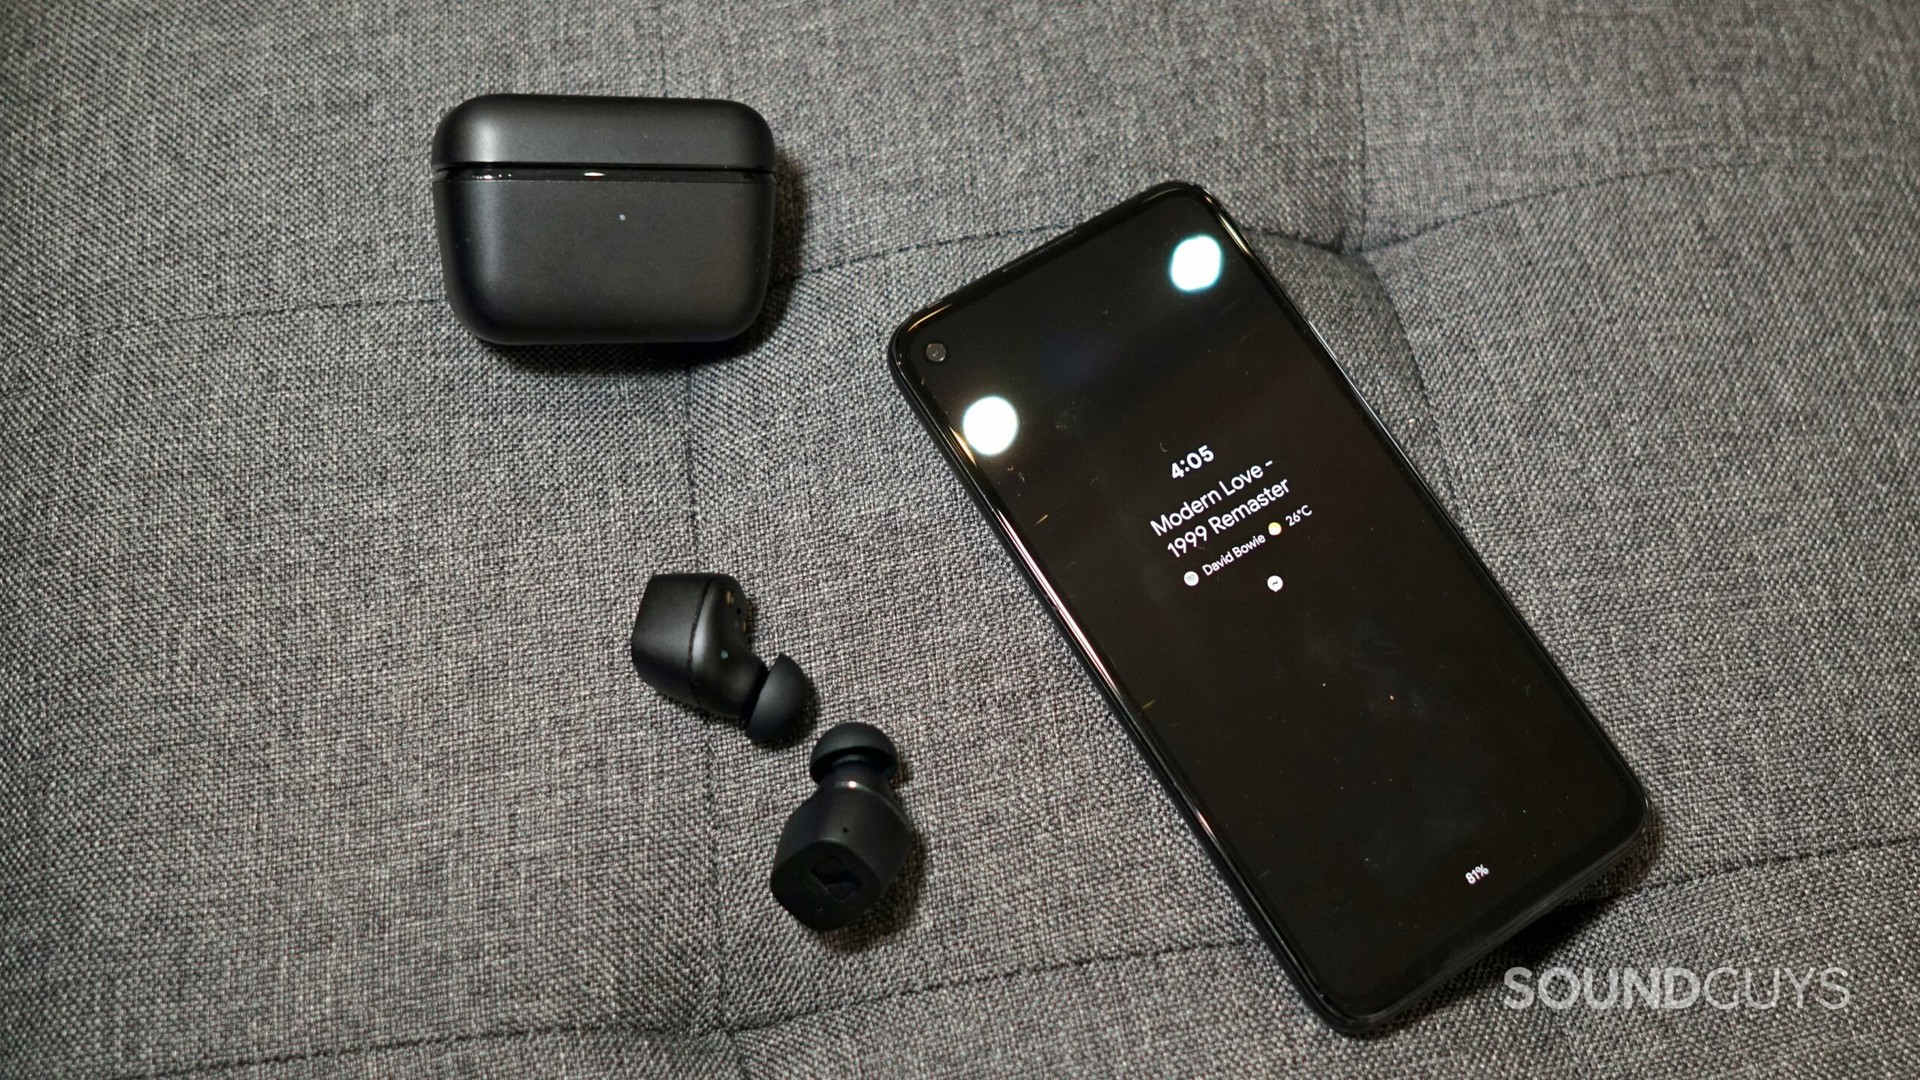 Sennheiser CX True Wireless headphones and case next to a phone.